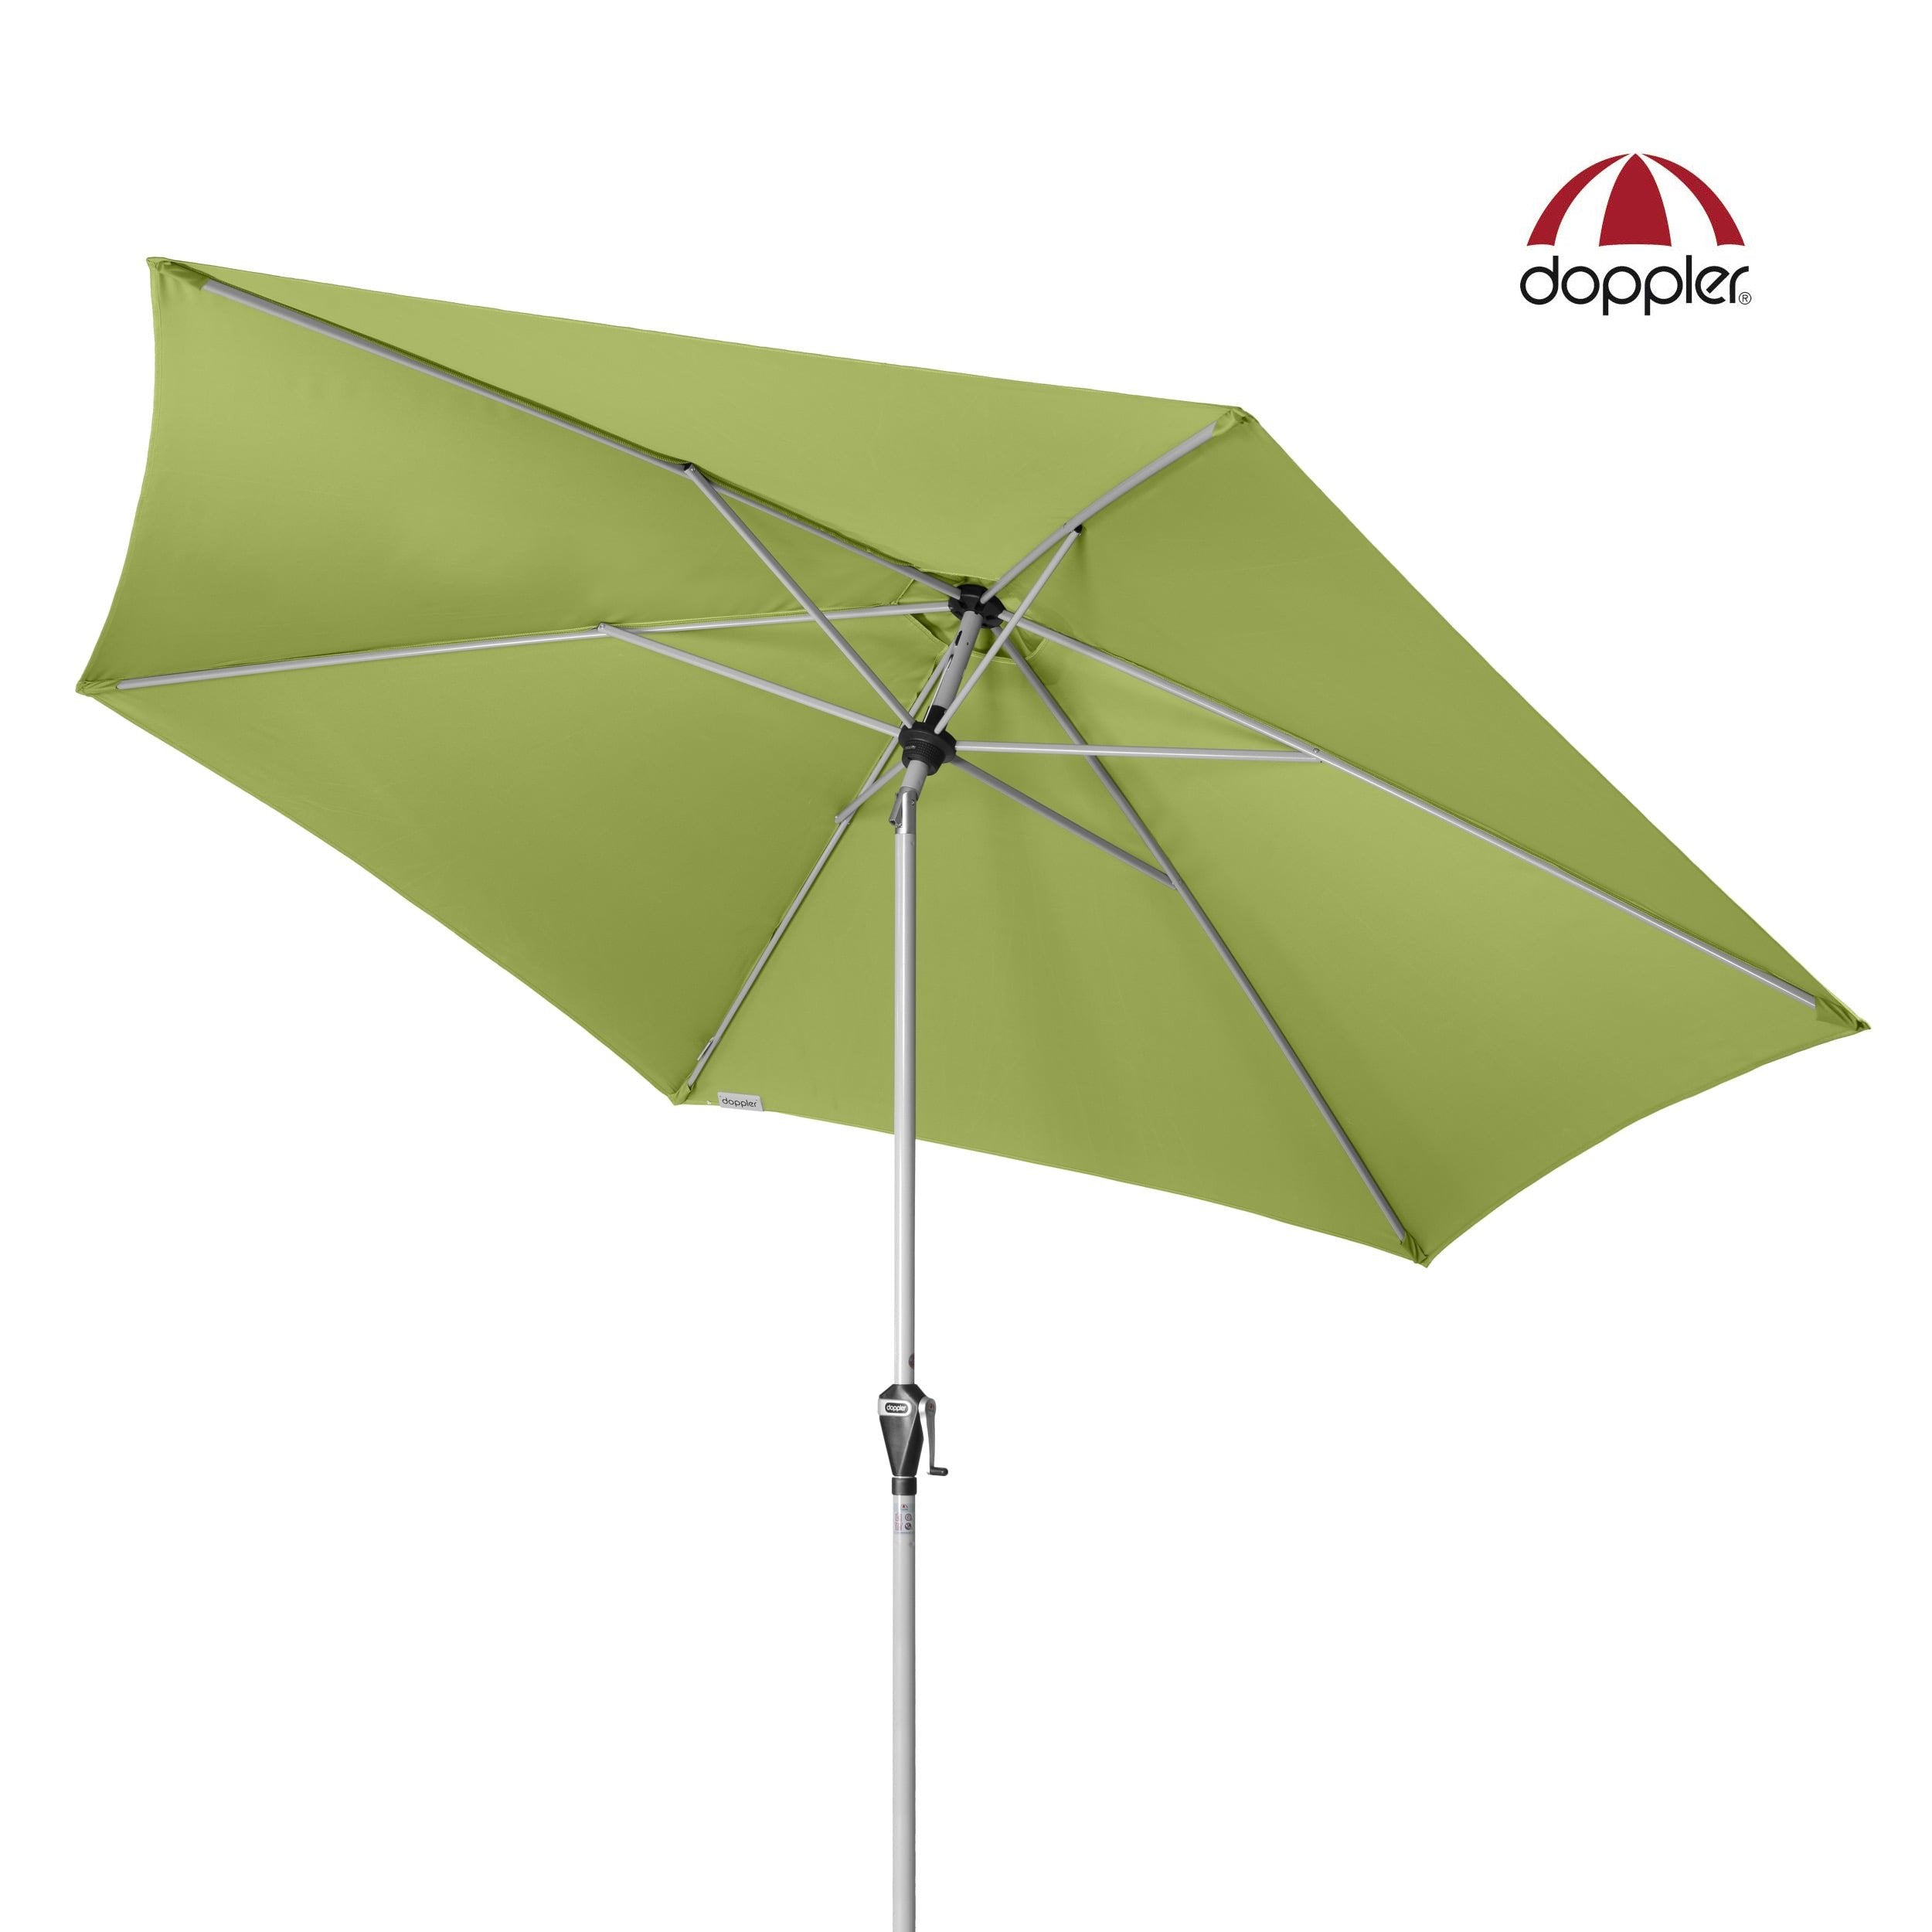 Doppler Outdoor Aluminium Umbrella (Parasol) with Centre Pole Auto-Tilt Mast and UV 50+ protective fabric